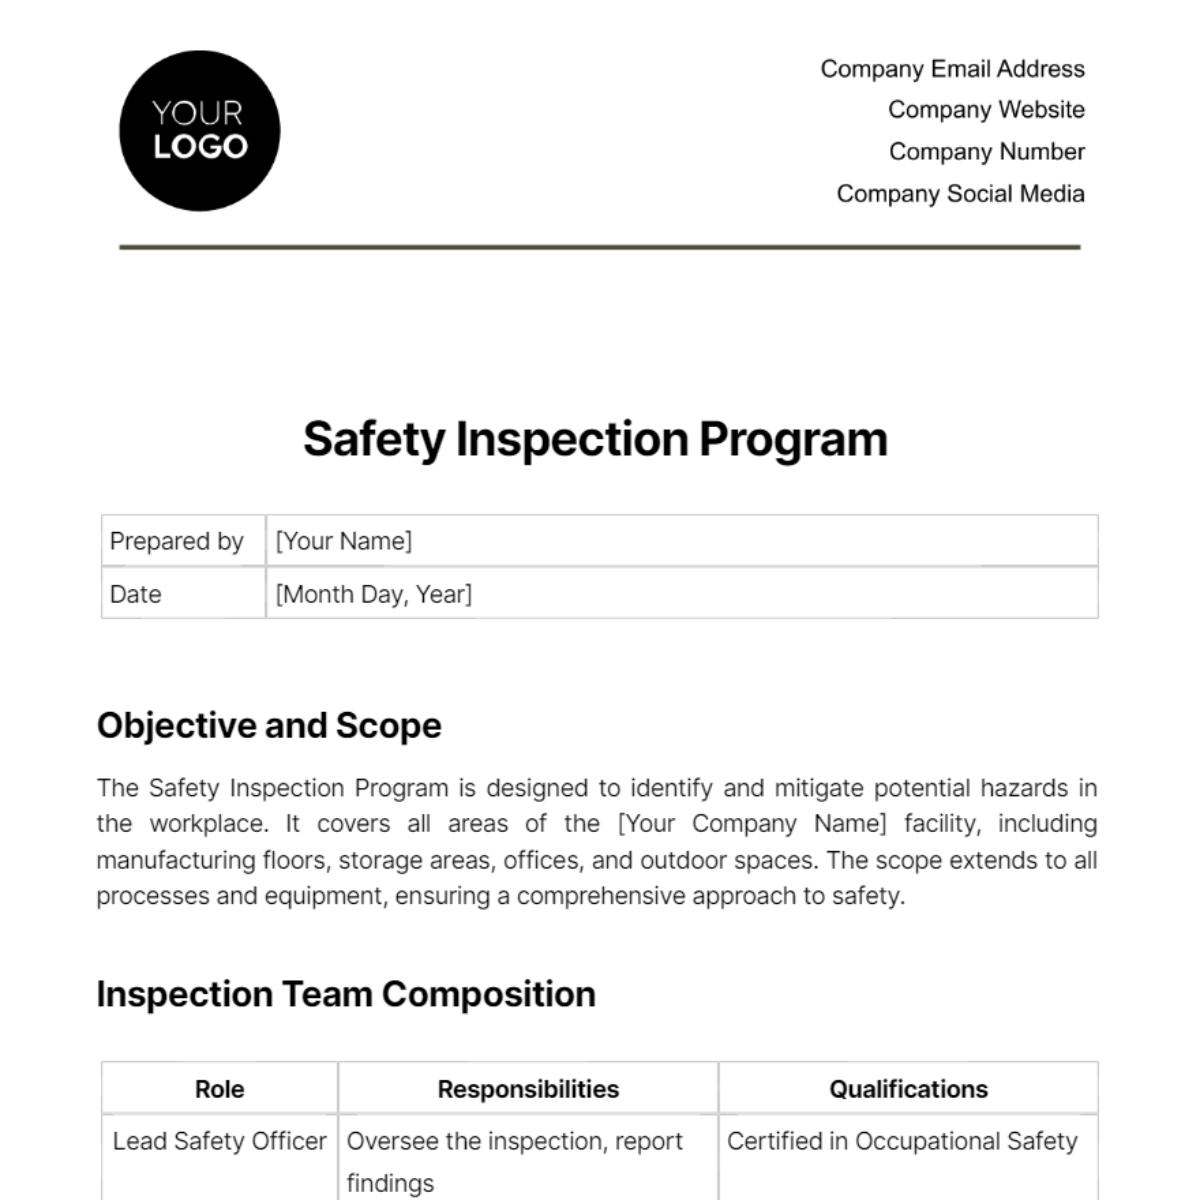 Safety Inspection Program Template